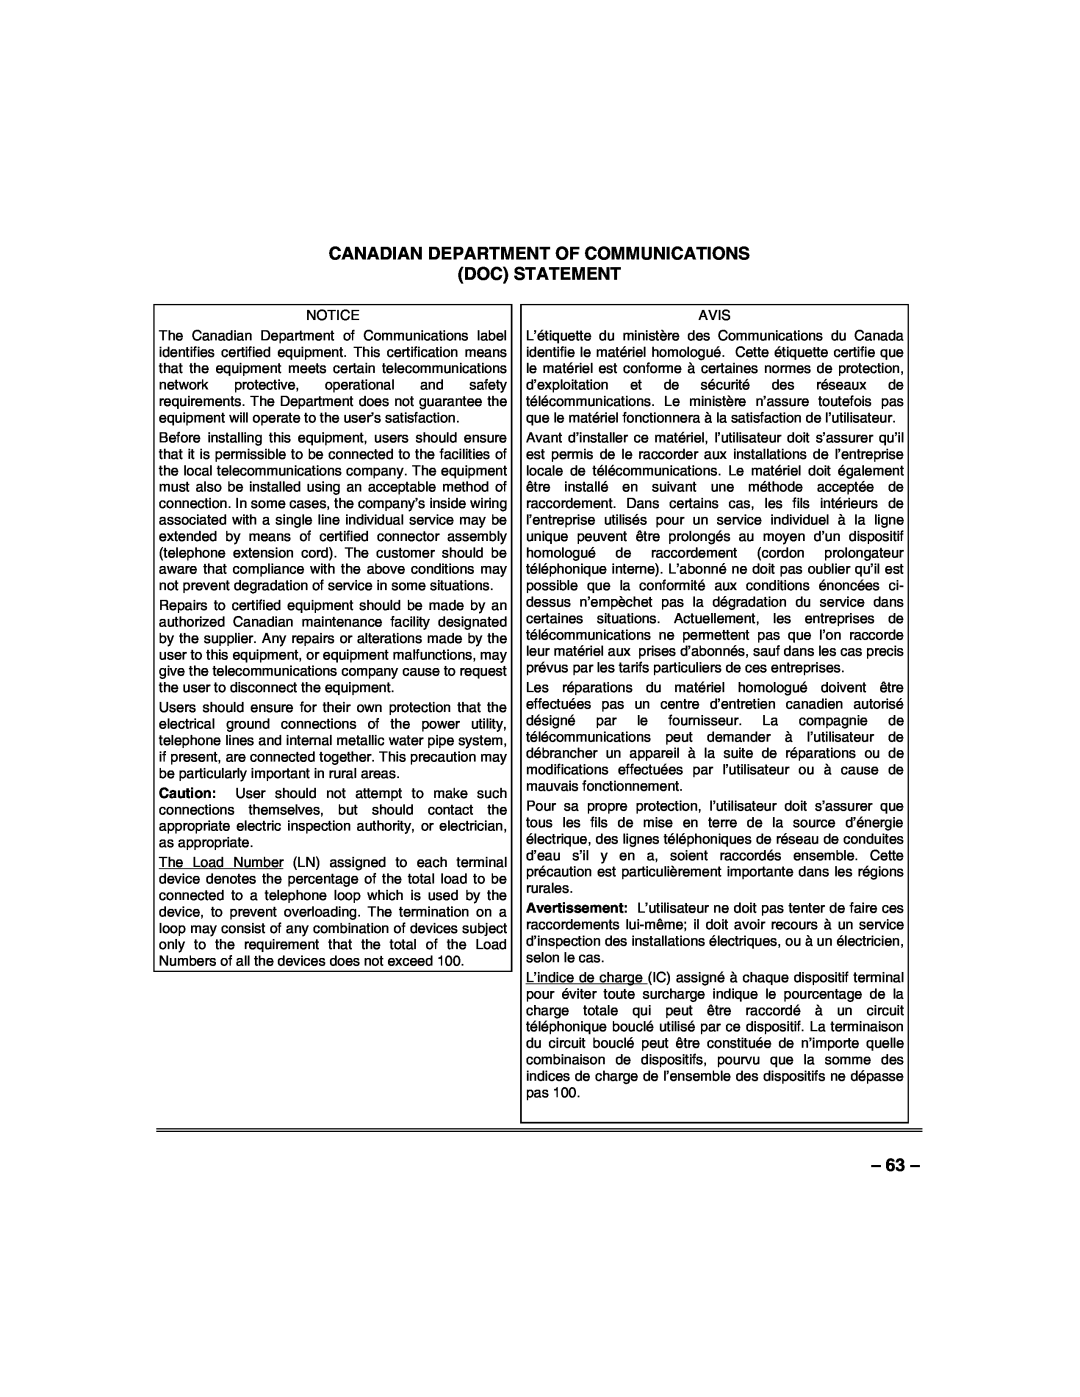 Honeywell VISTA-50PUL manual Canadian Department Of Communications, Doc Statement 